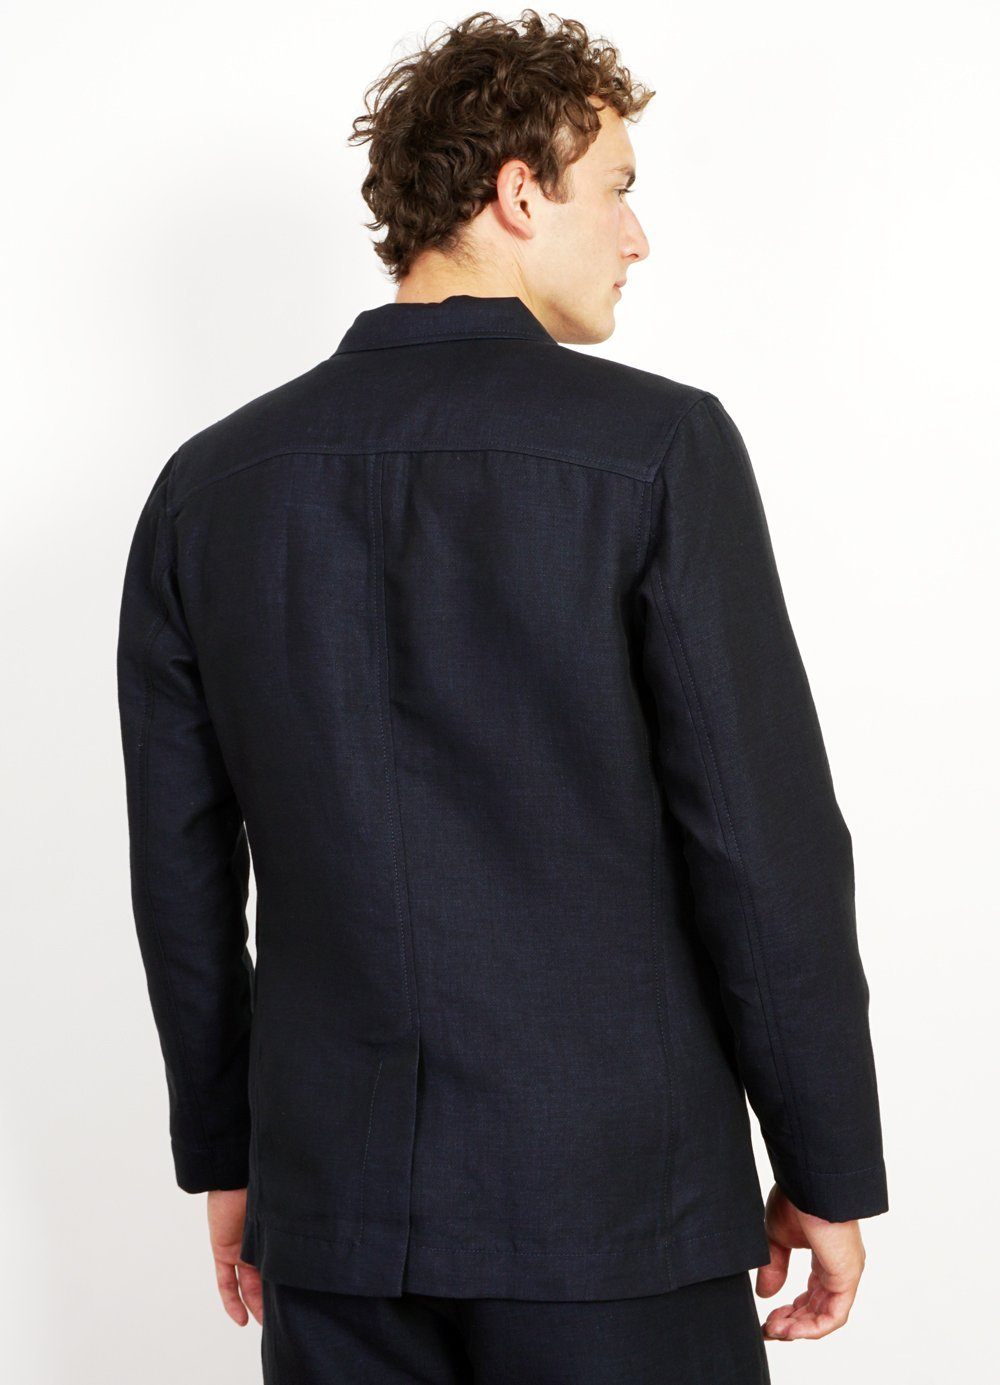 JOHANNES | Casual Blazer Jacket | 3-Tone Blue -HANSEN Garments- HANSEN Garments